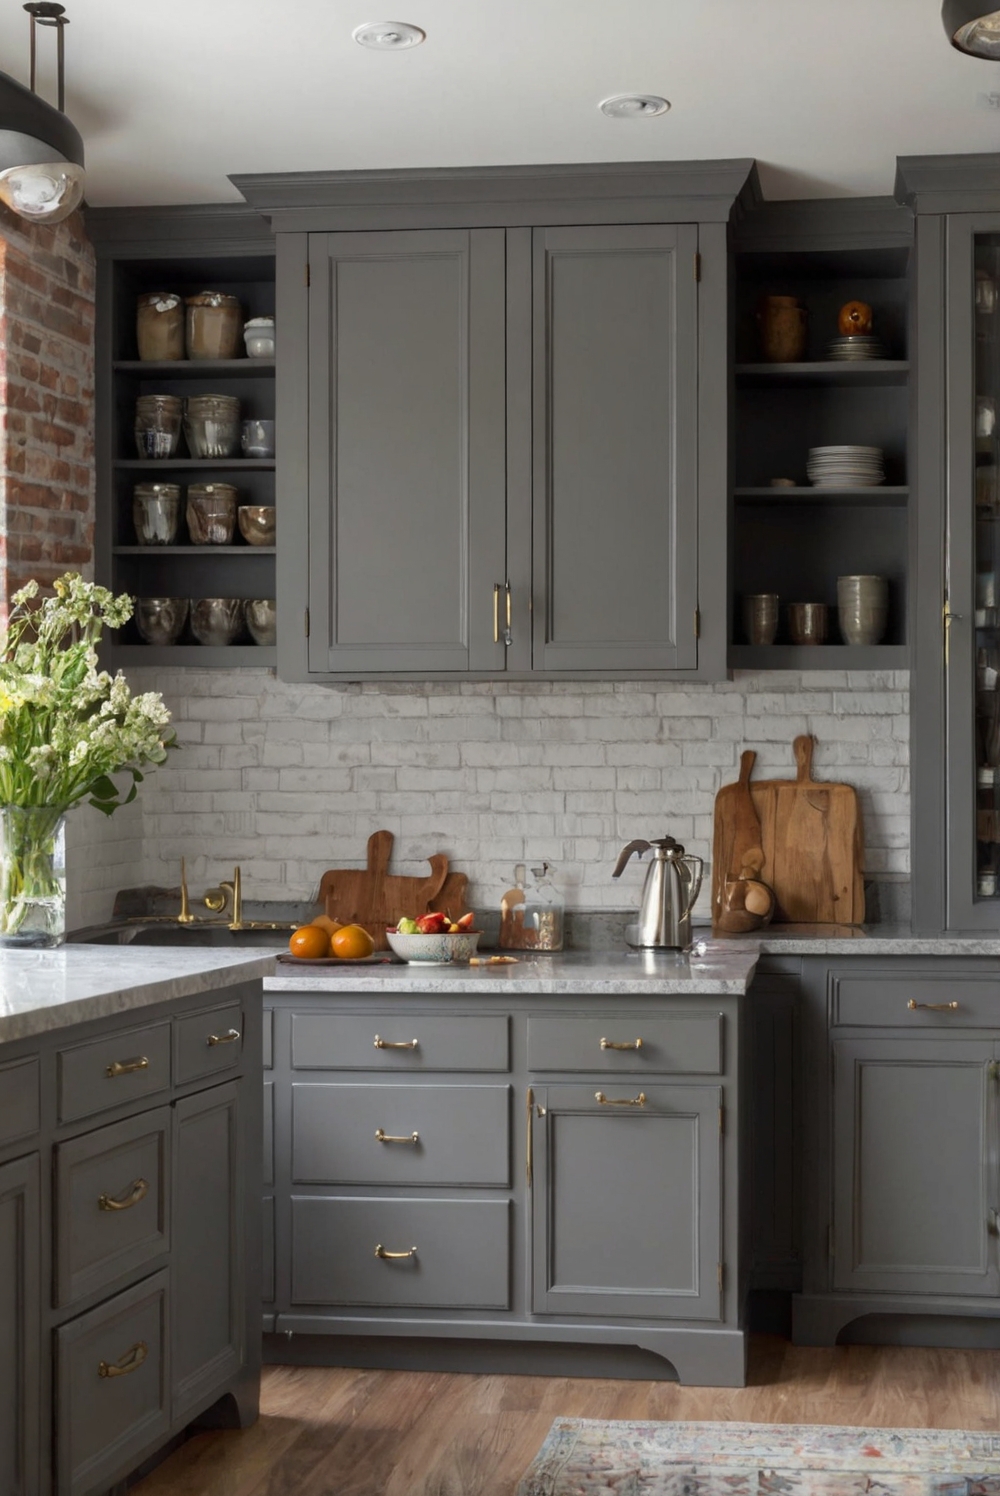 cabinet color, kitchen design, kitchen cabinet colors, kitchen remodel, kitchen renovation, kitchen color ideas, kitchen cabinet ideas